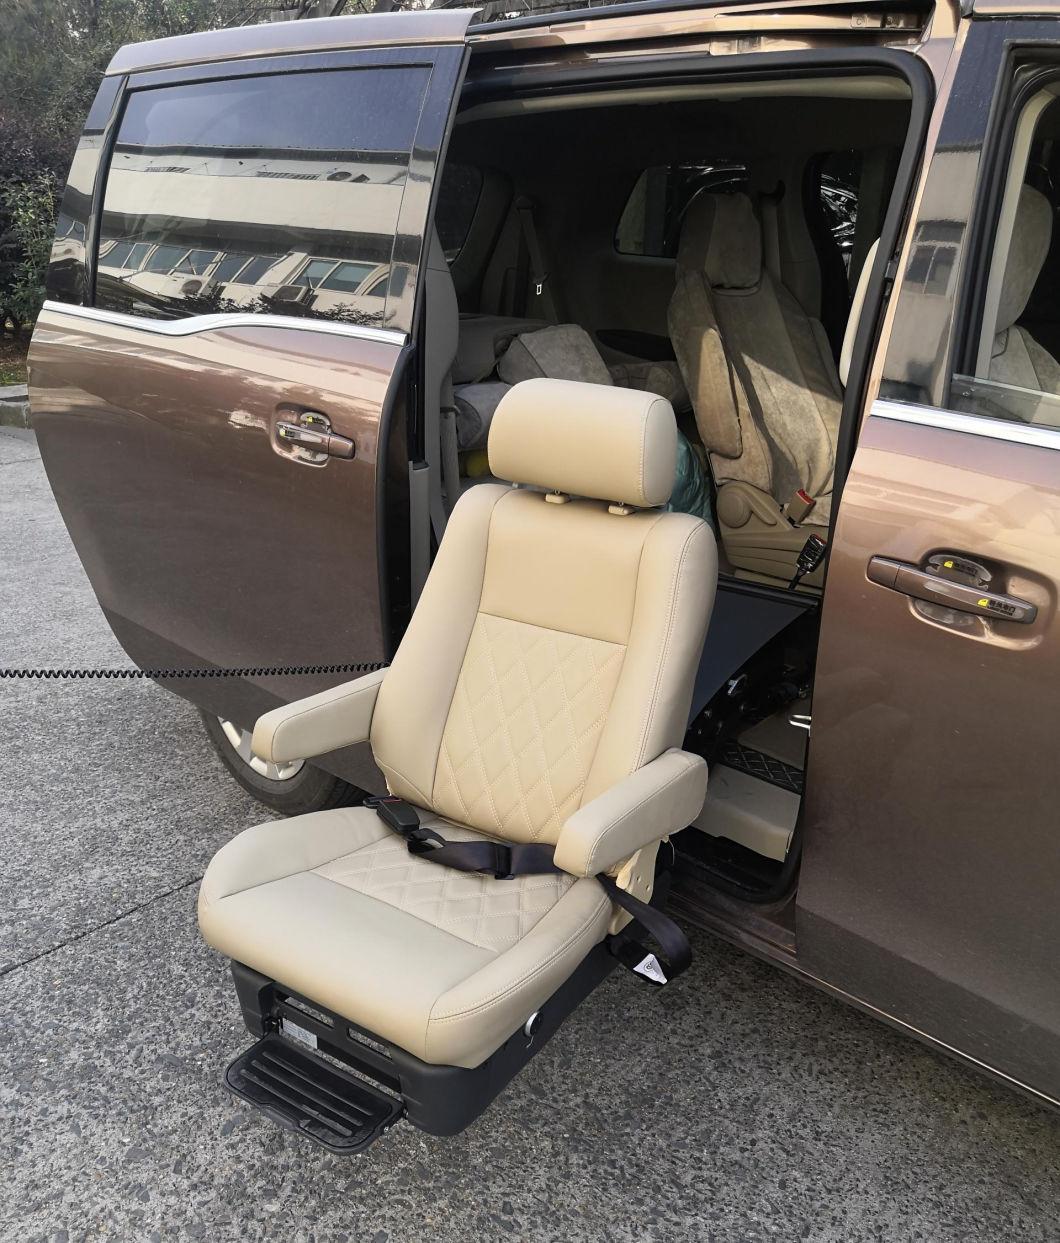 2018 Programmable Swivel Turning Car Seat for Vans